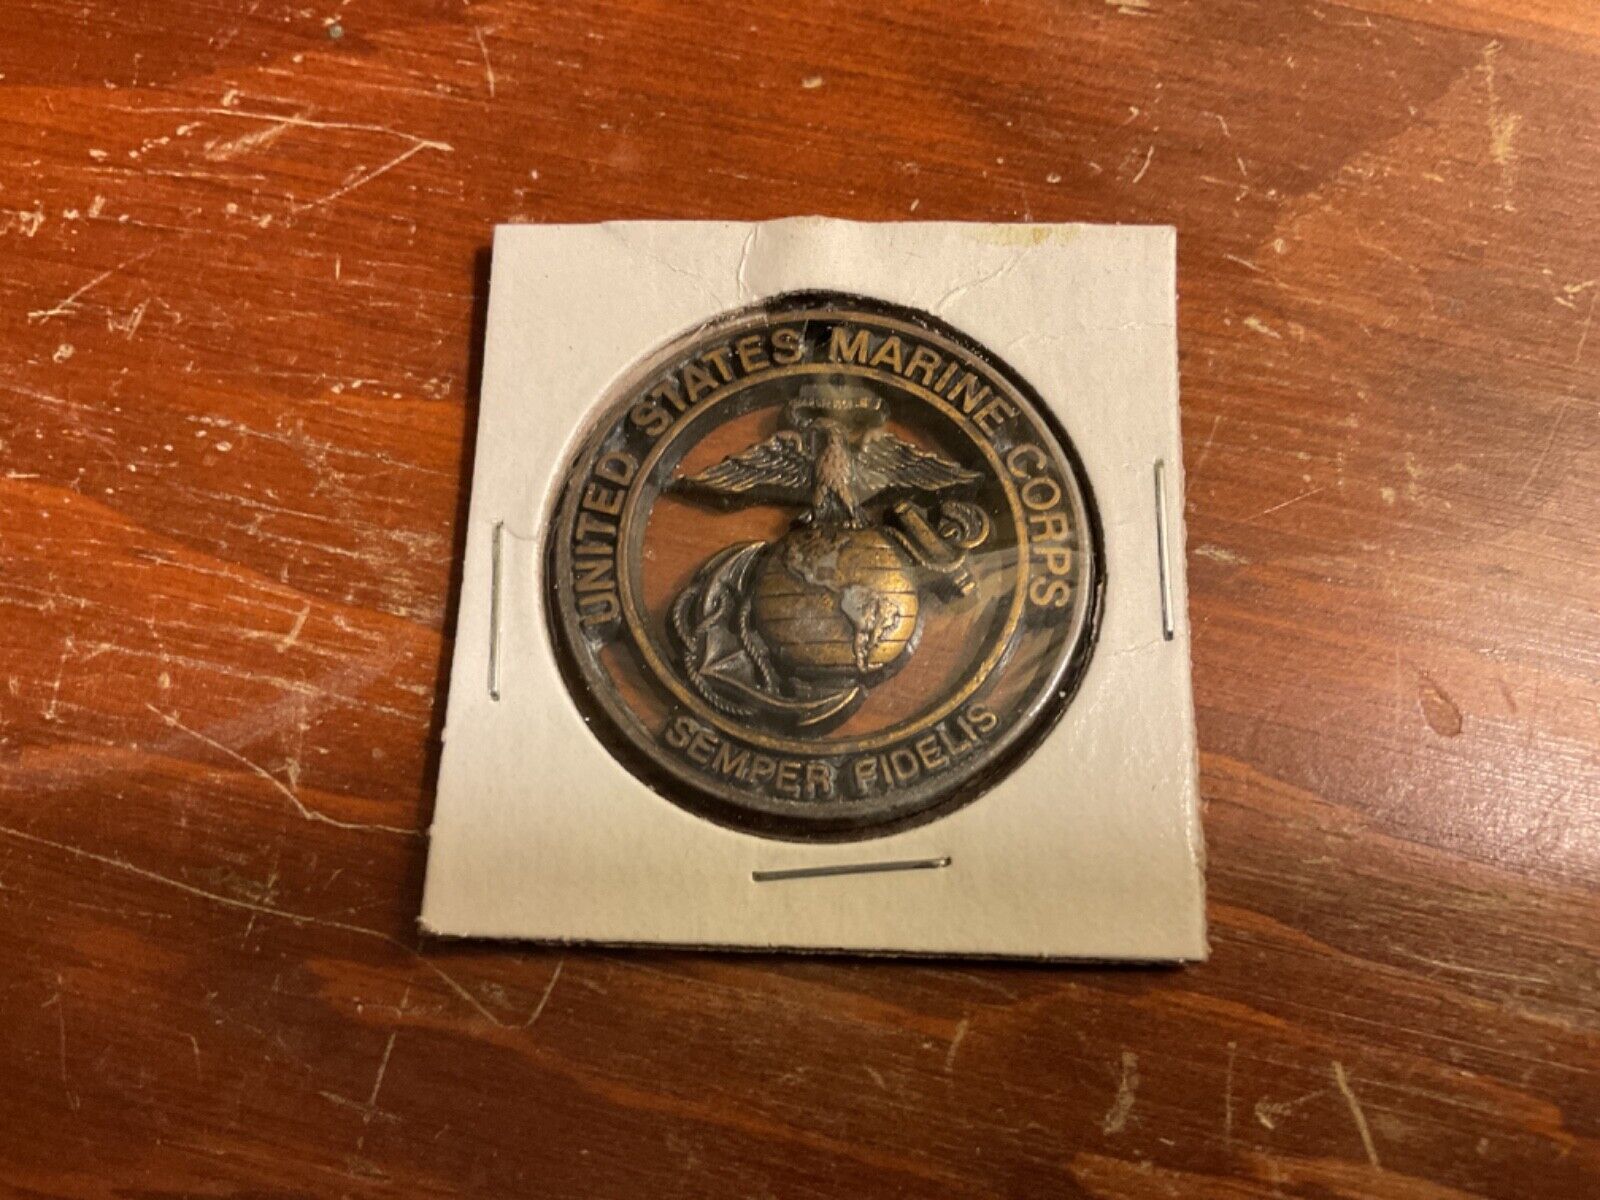 United States Marine Corps Semper Fidelis medal